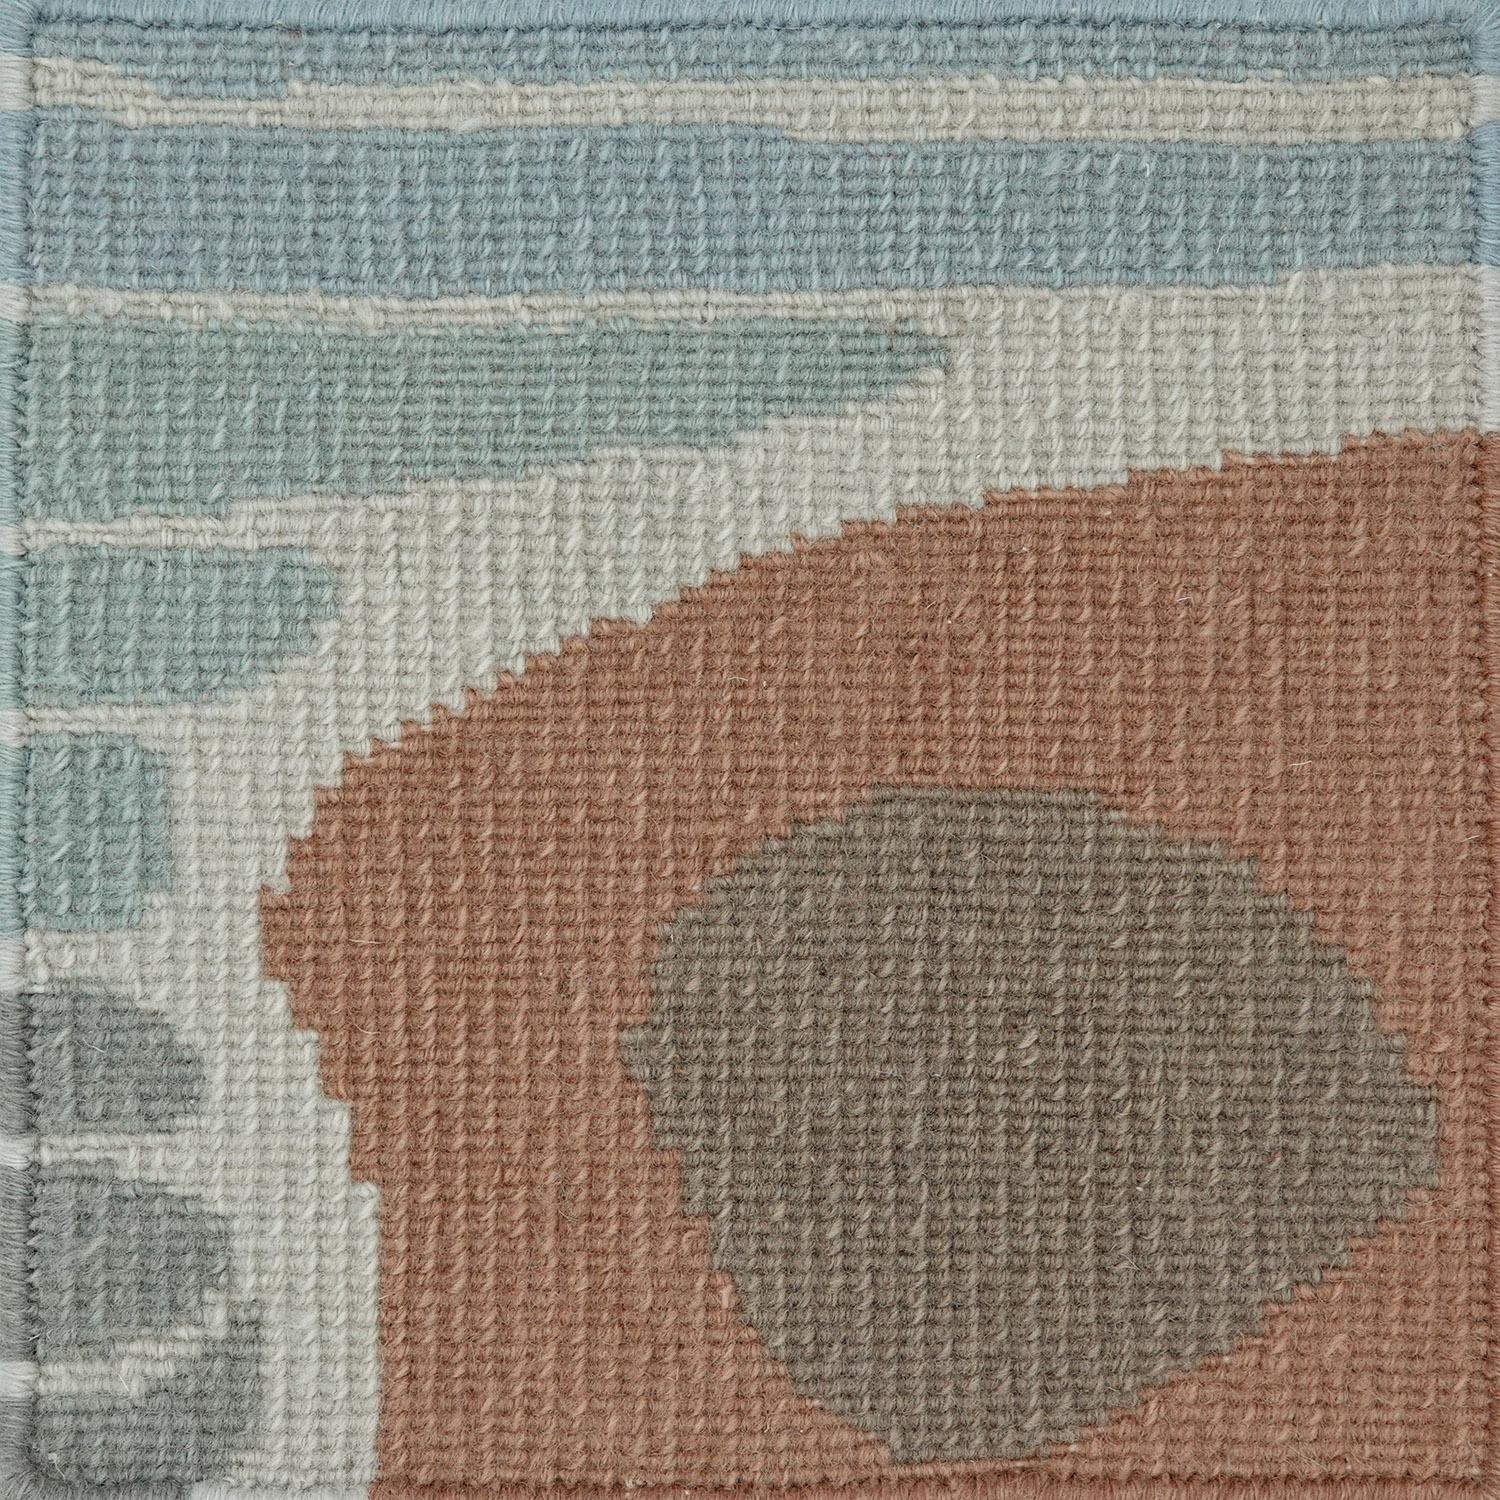 Modern colofrul unusual rug Multicolored Irregular shape, Gamma Est small For Sale 6